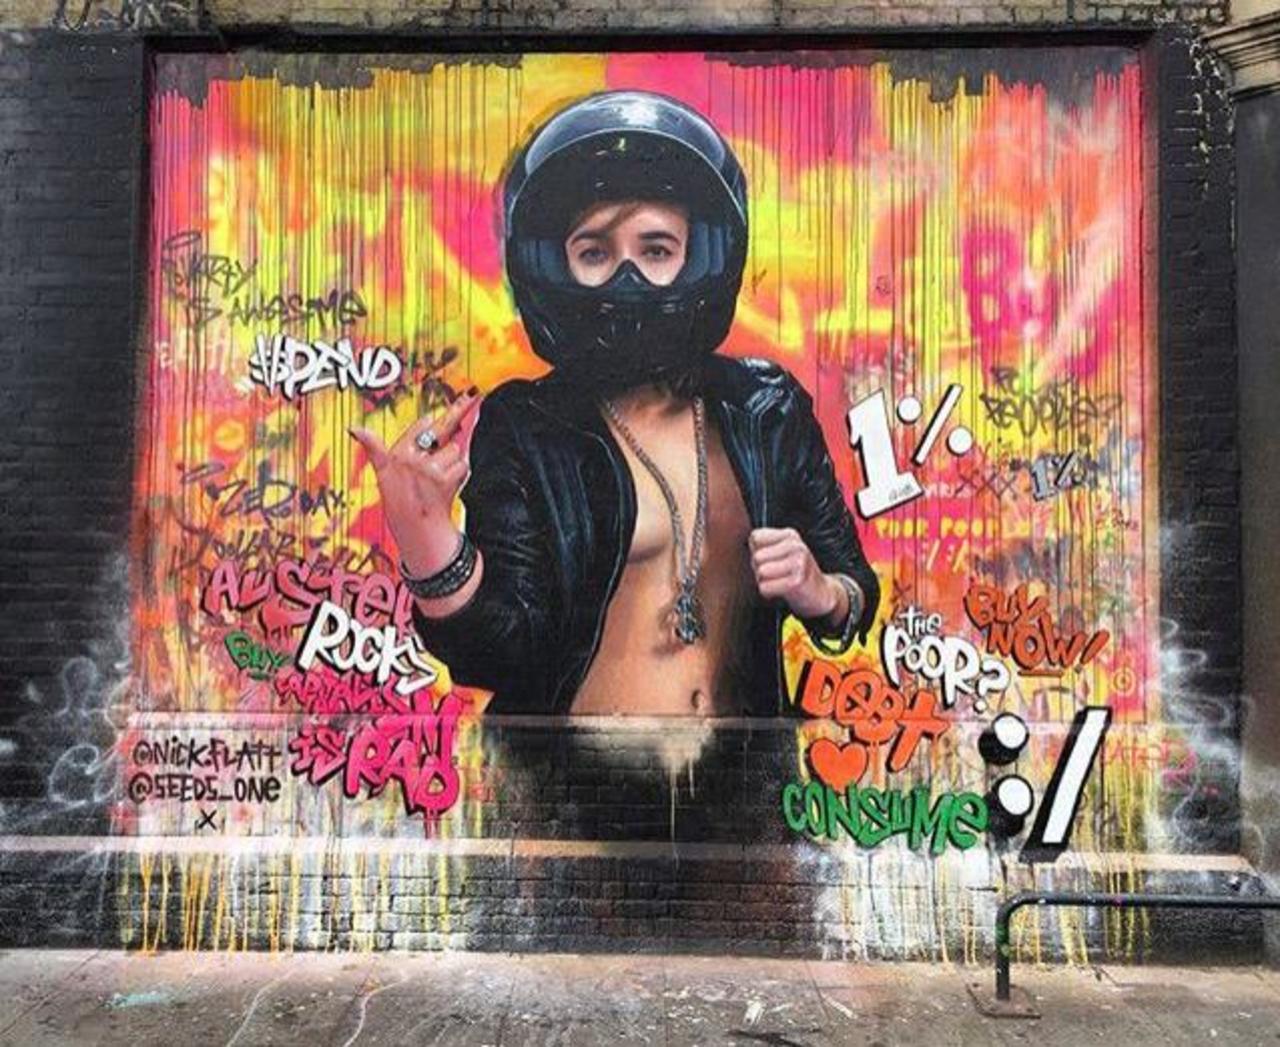 New Street Art collab by Nick Flatt &  Seeds One in London 

#art #graffiti #mural #streetart http://t.co/Bp0633PHTY